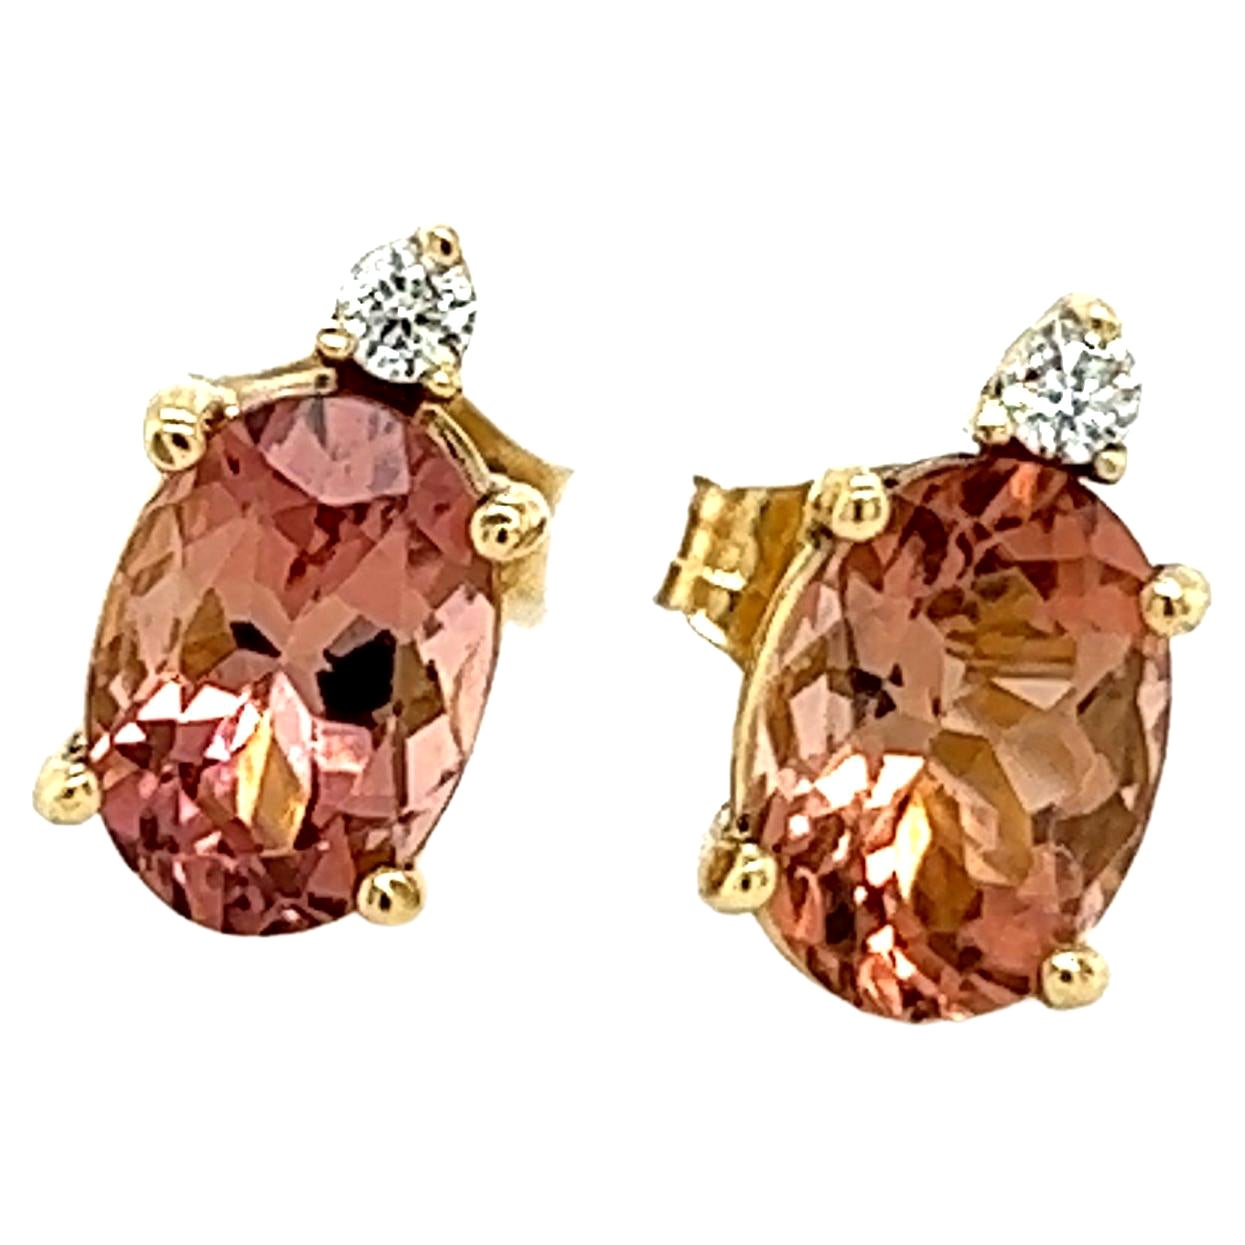 Natural Tourmaline Diamond Stud Earrings 14k Y Gold 1.76 TCW Certified